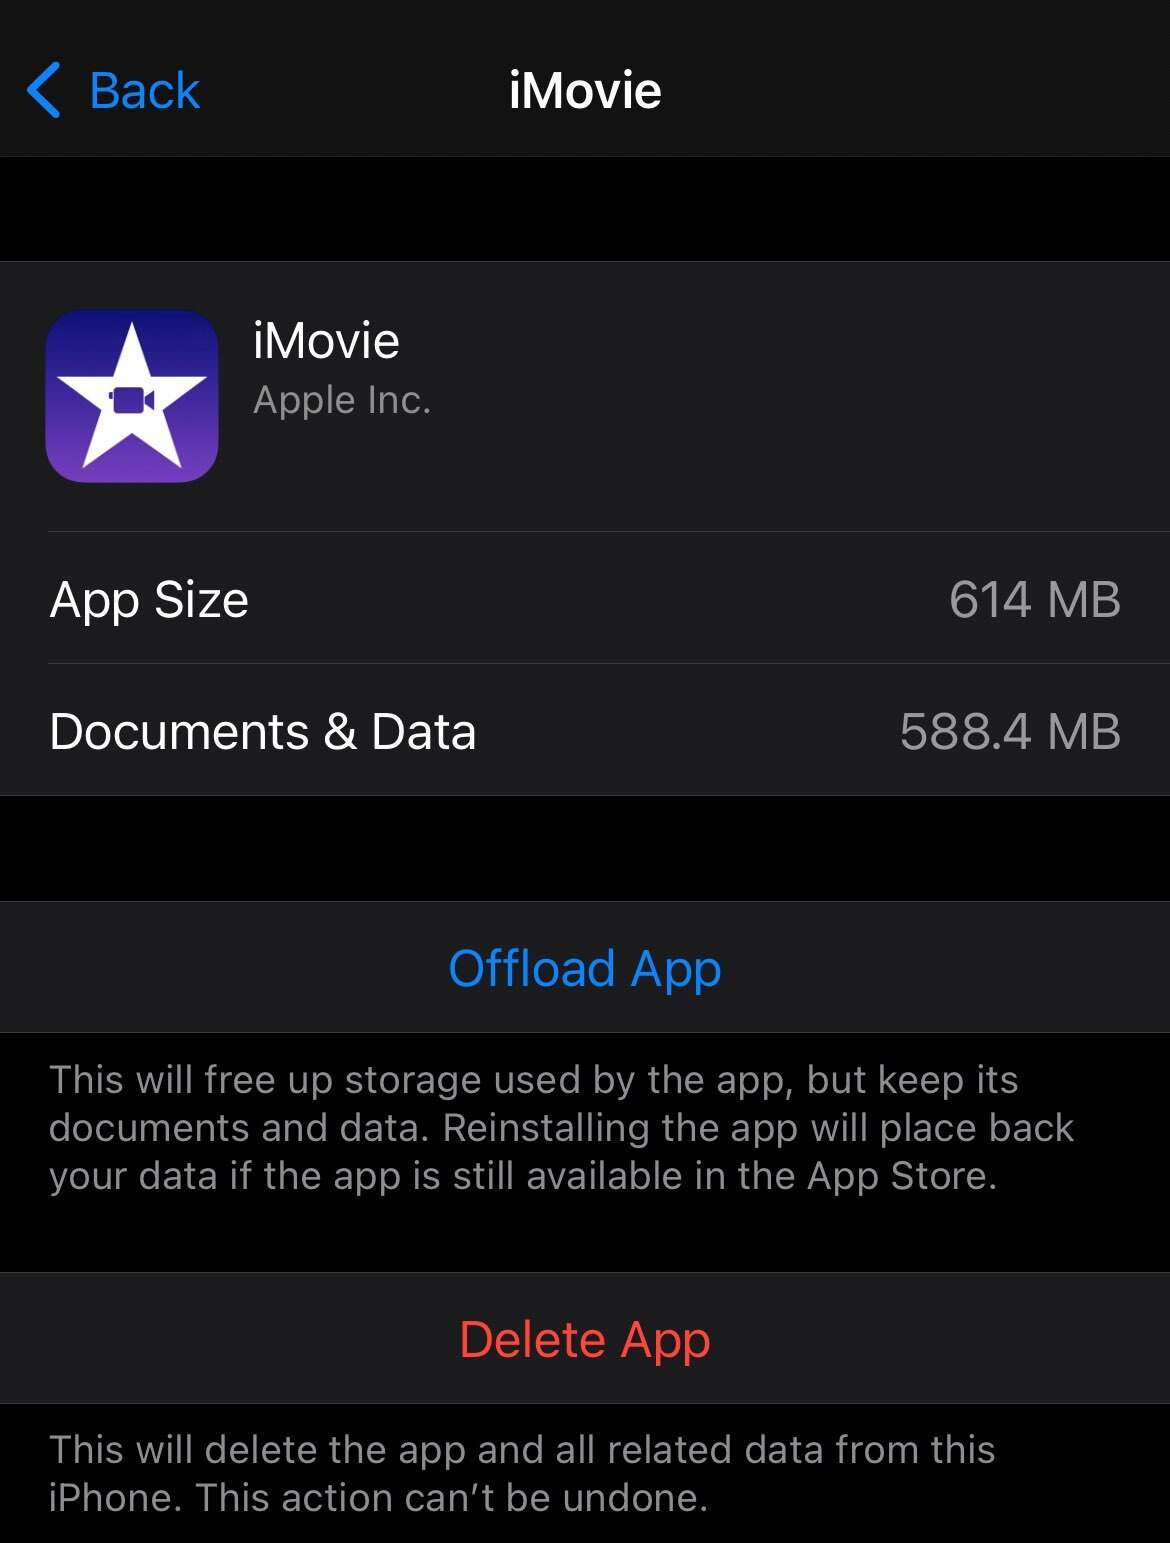 IMovie information and storage options